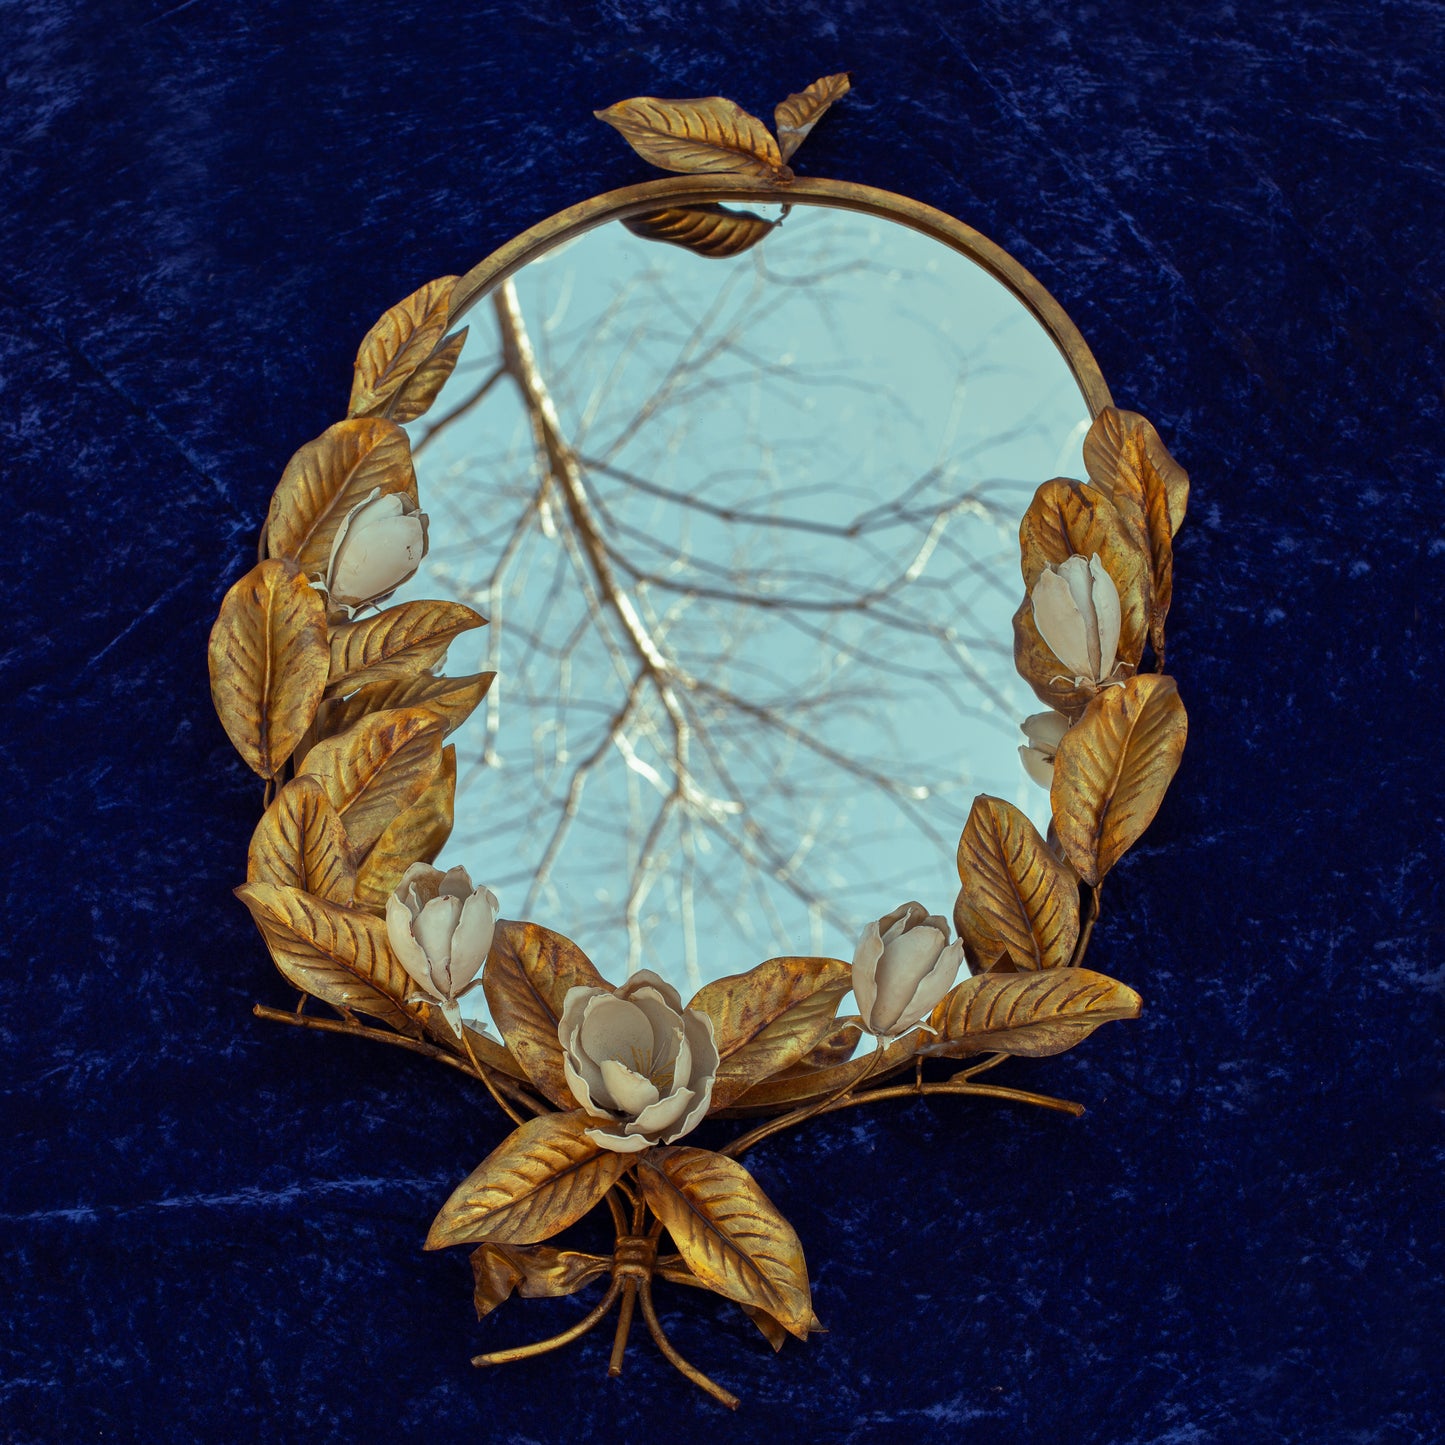 Vintage 1940s Italian Guilt + Tole Magnolia Mirror